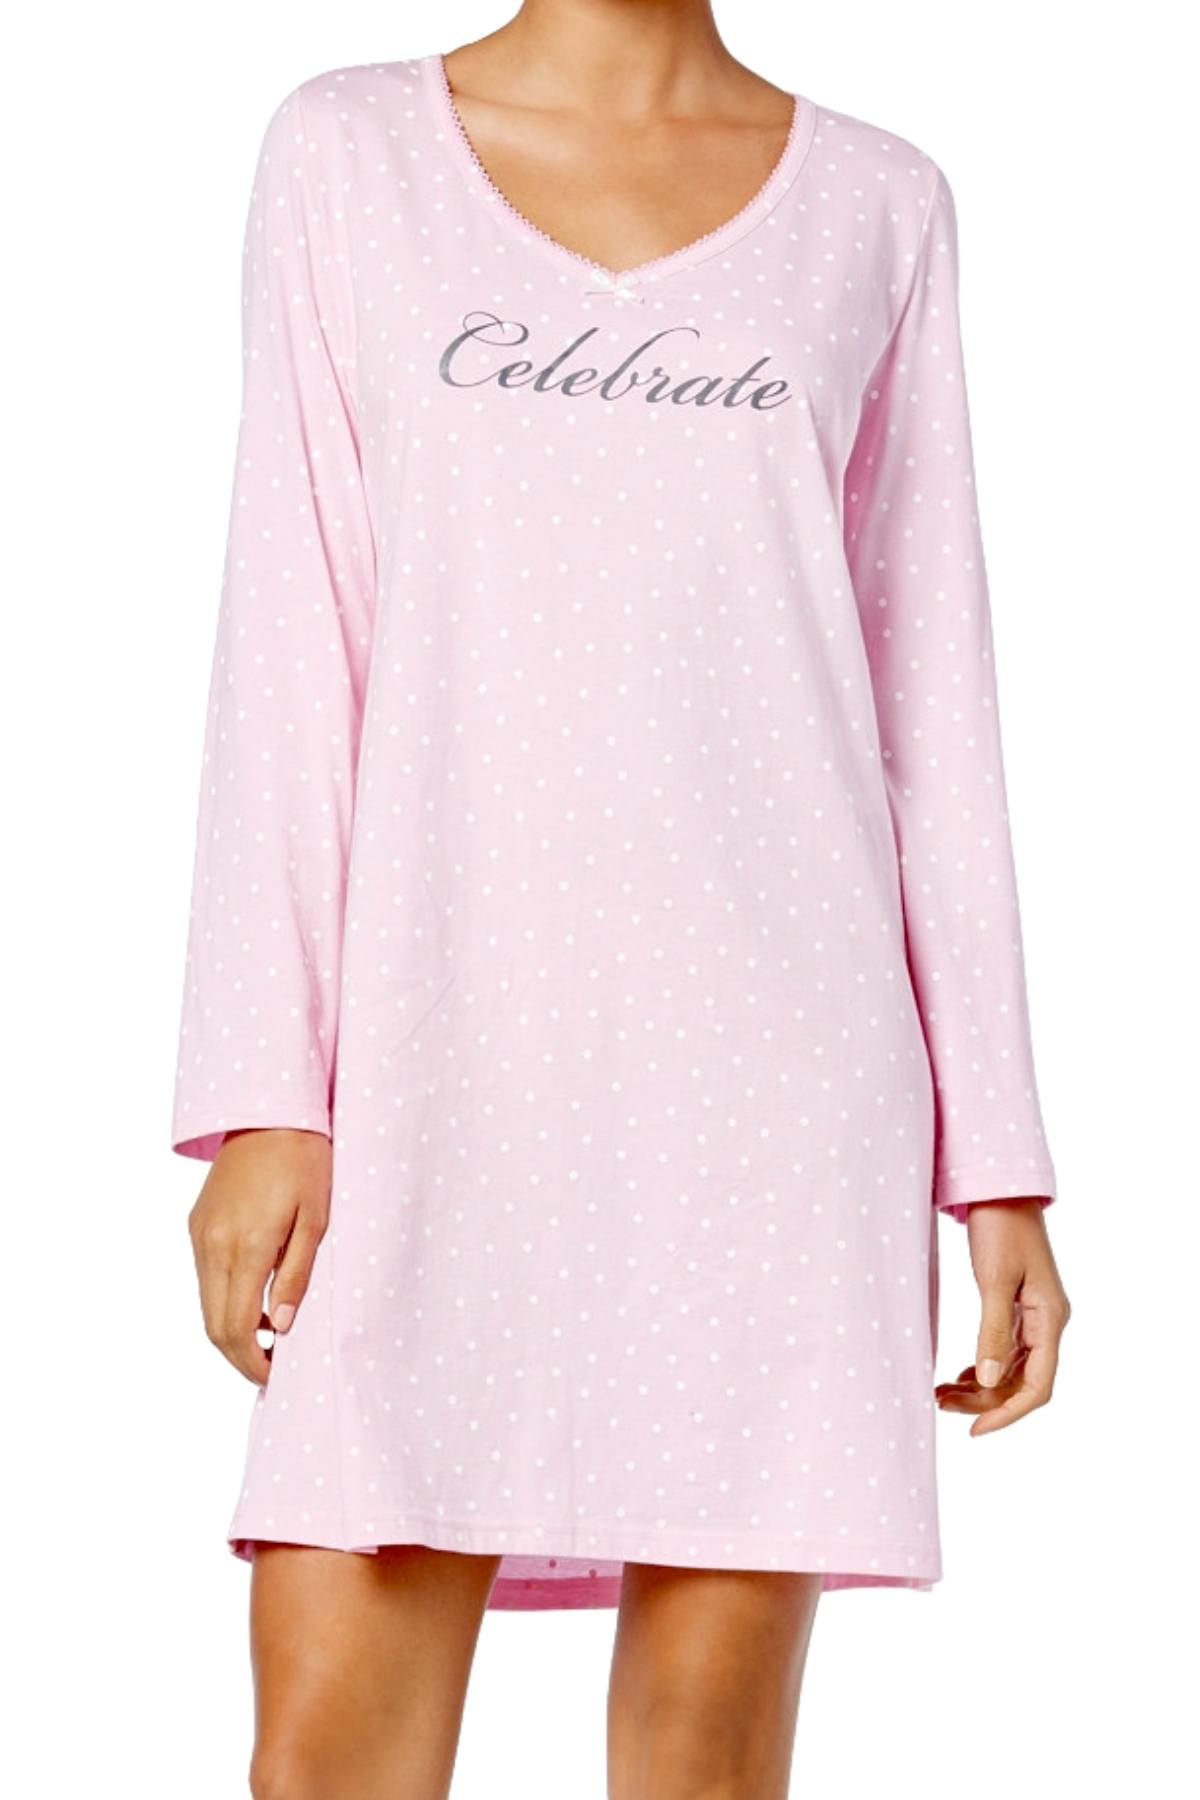 Charter Club Intimates Pink Celebrate Graphic-Print Cotton Sleepshirt With Matching Socks